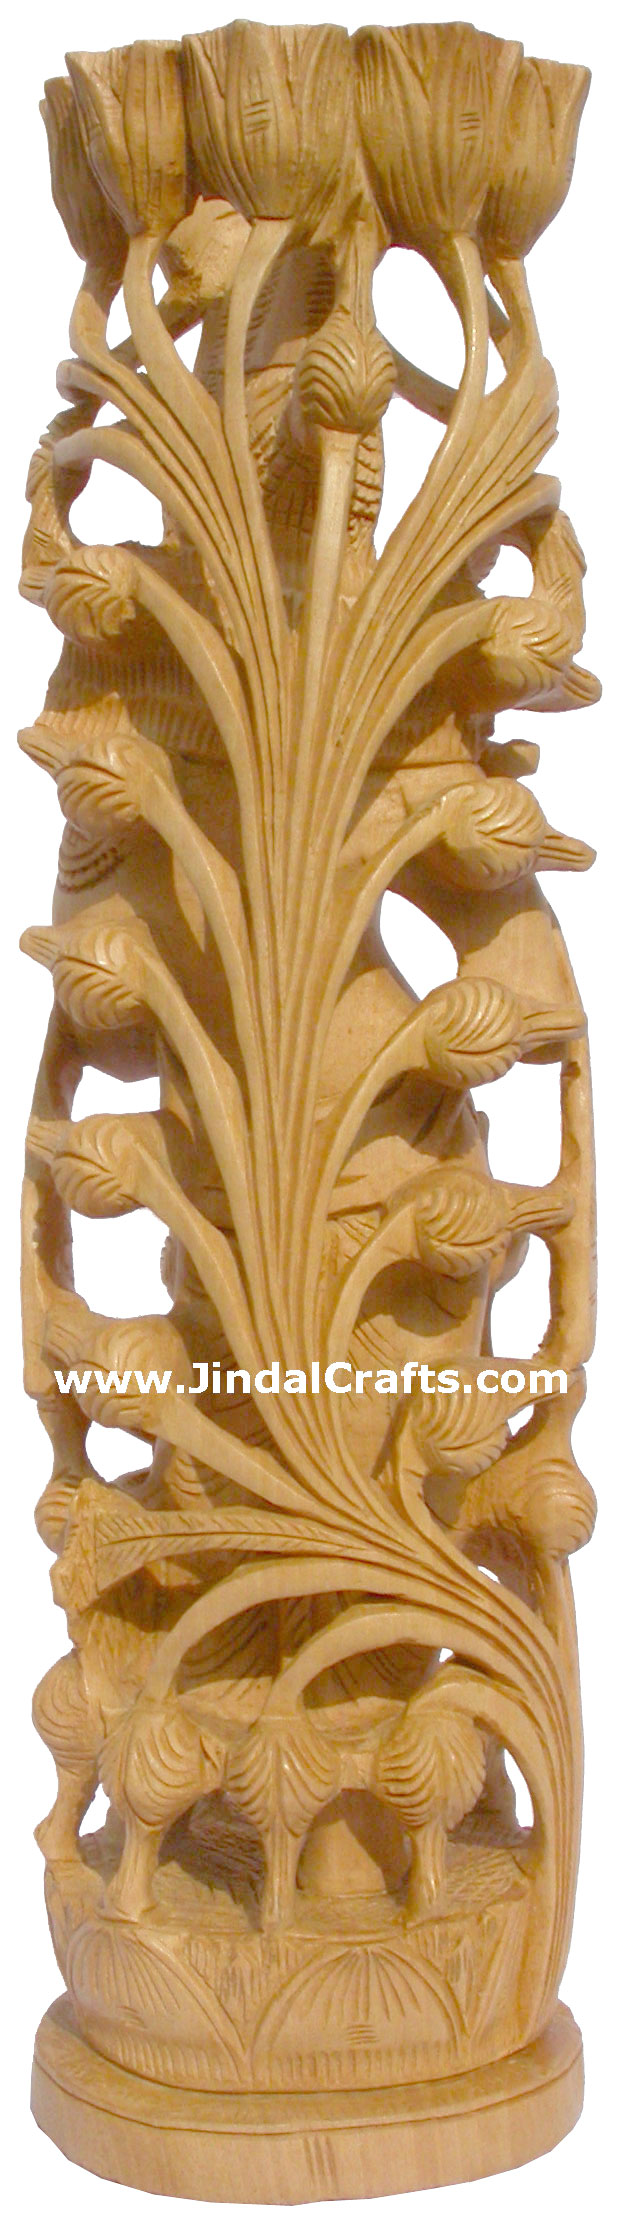 Wooden Hand Carved Sculpture Lord Krishna Statuette Hindu Religious Handicrafts